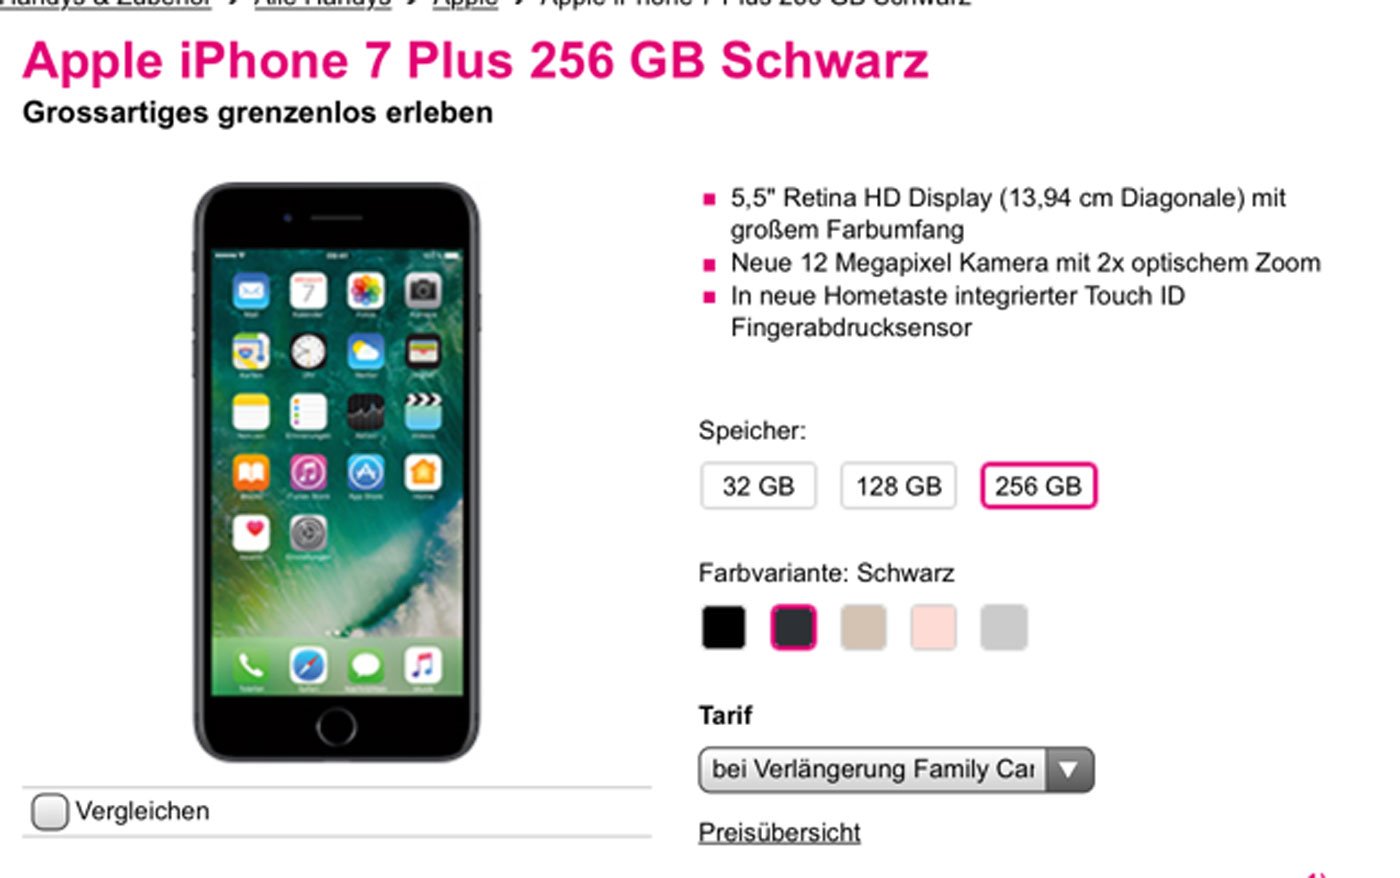 iPhone 7 Vertragsverlängerung (VVL) bei Telekom bereits möglich! 8